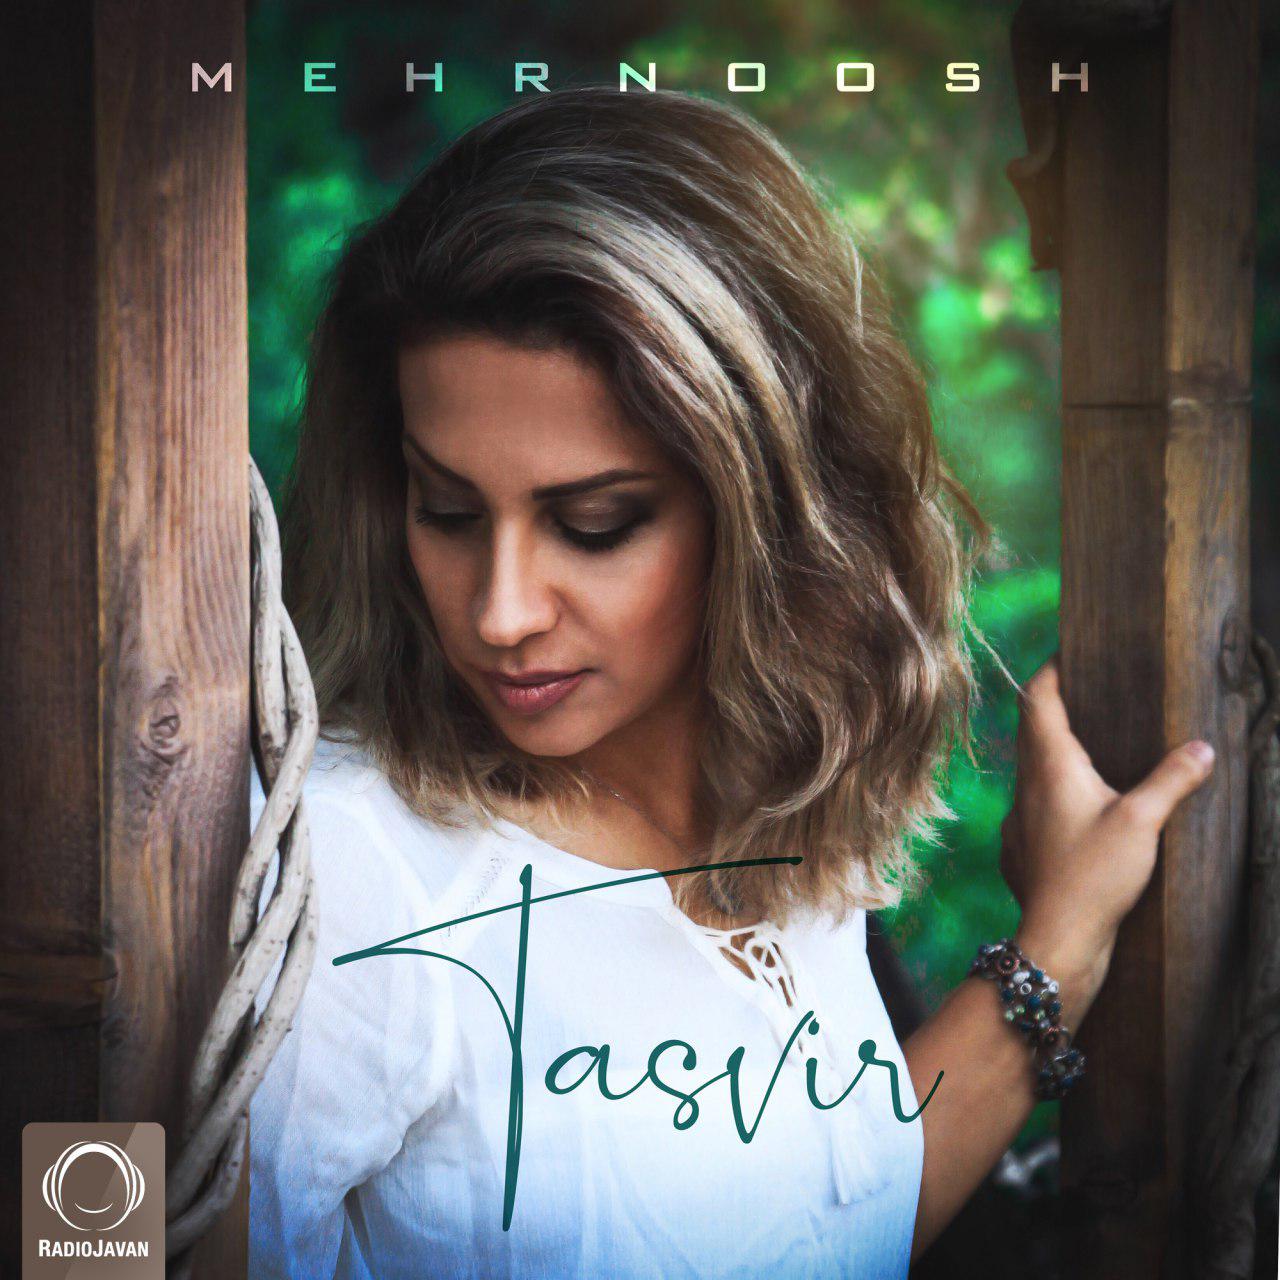  دانلود آهنگ جدید مهرنوش - تصویر | Download New Music By Mehrnoosh - Tasvir